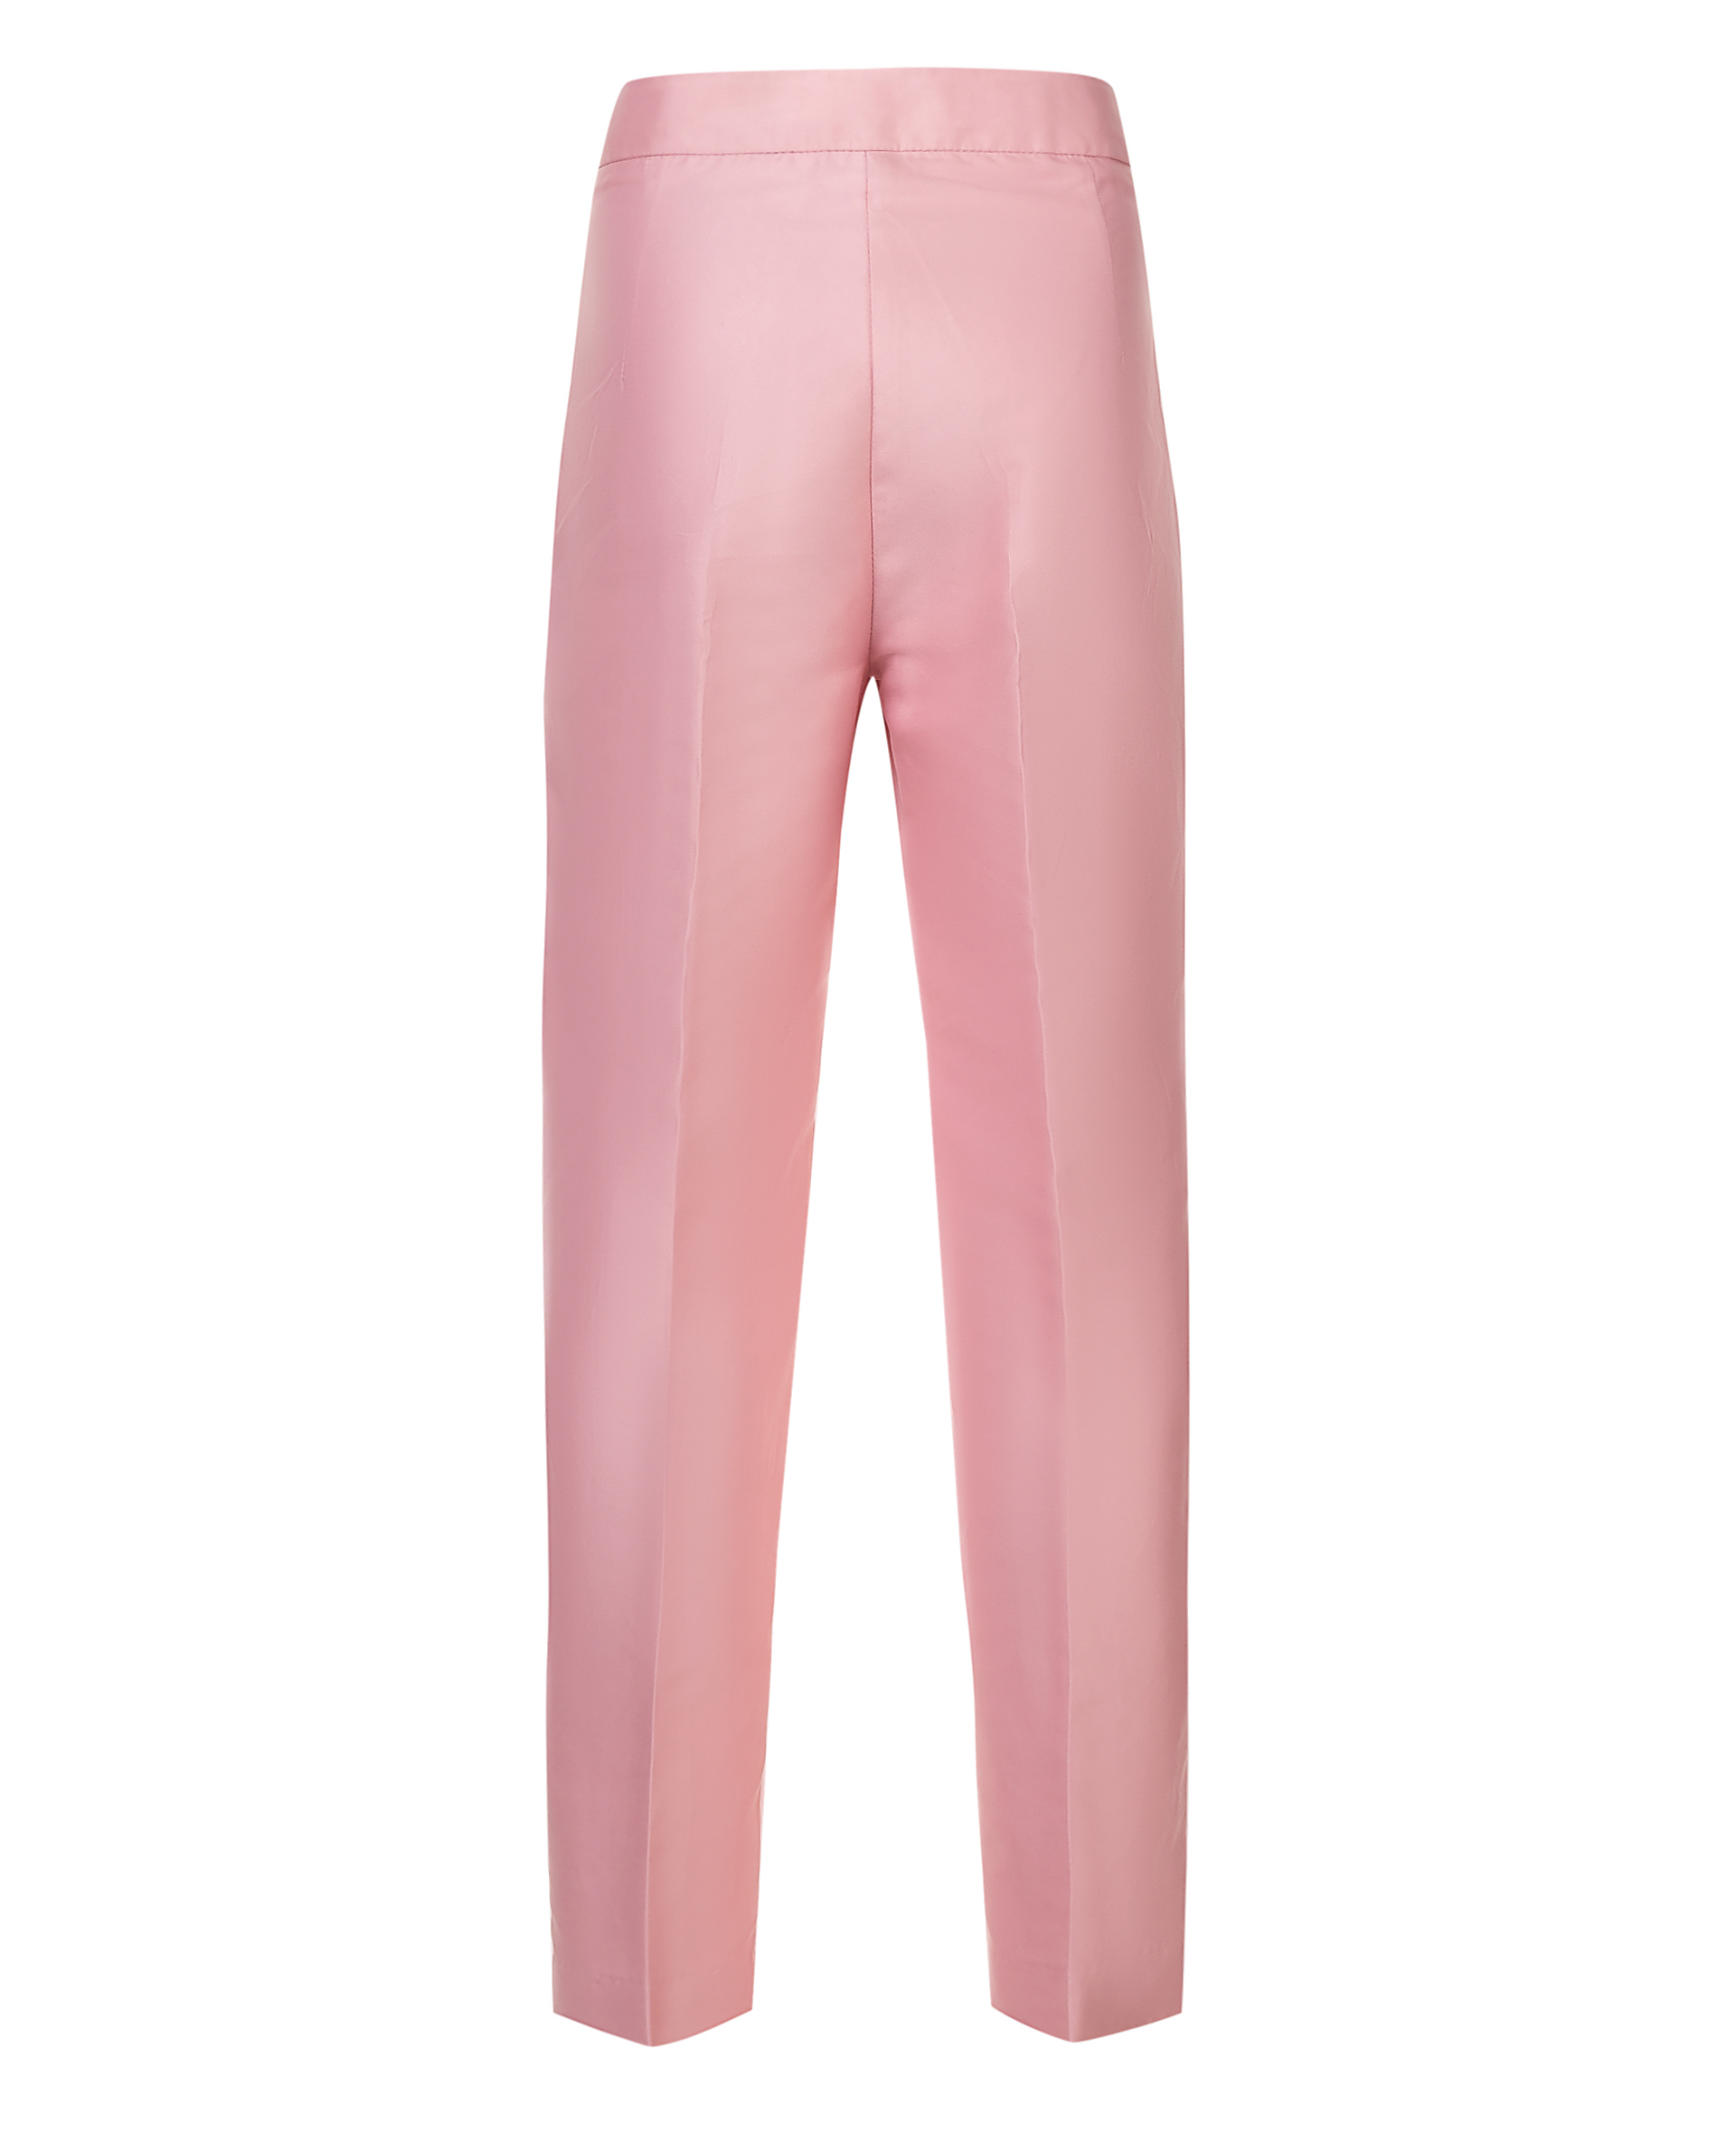 Розовые брюки Gulliver 119GPGJC6301, размер 146, цвет розовый - фото 2